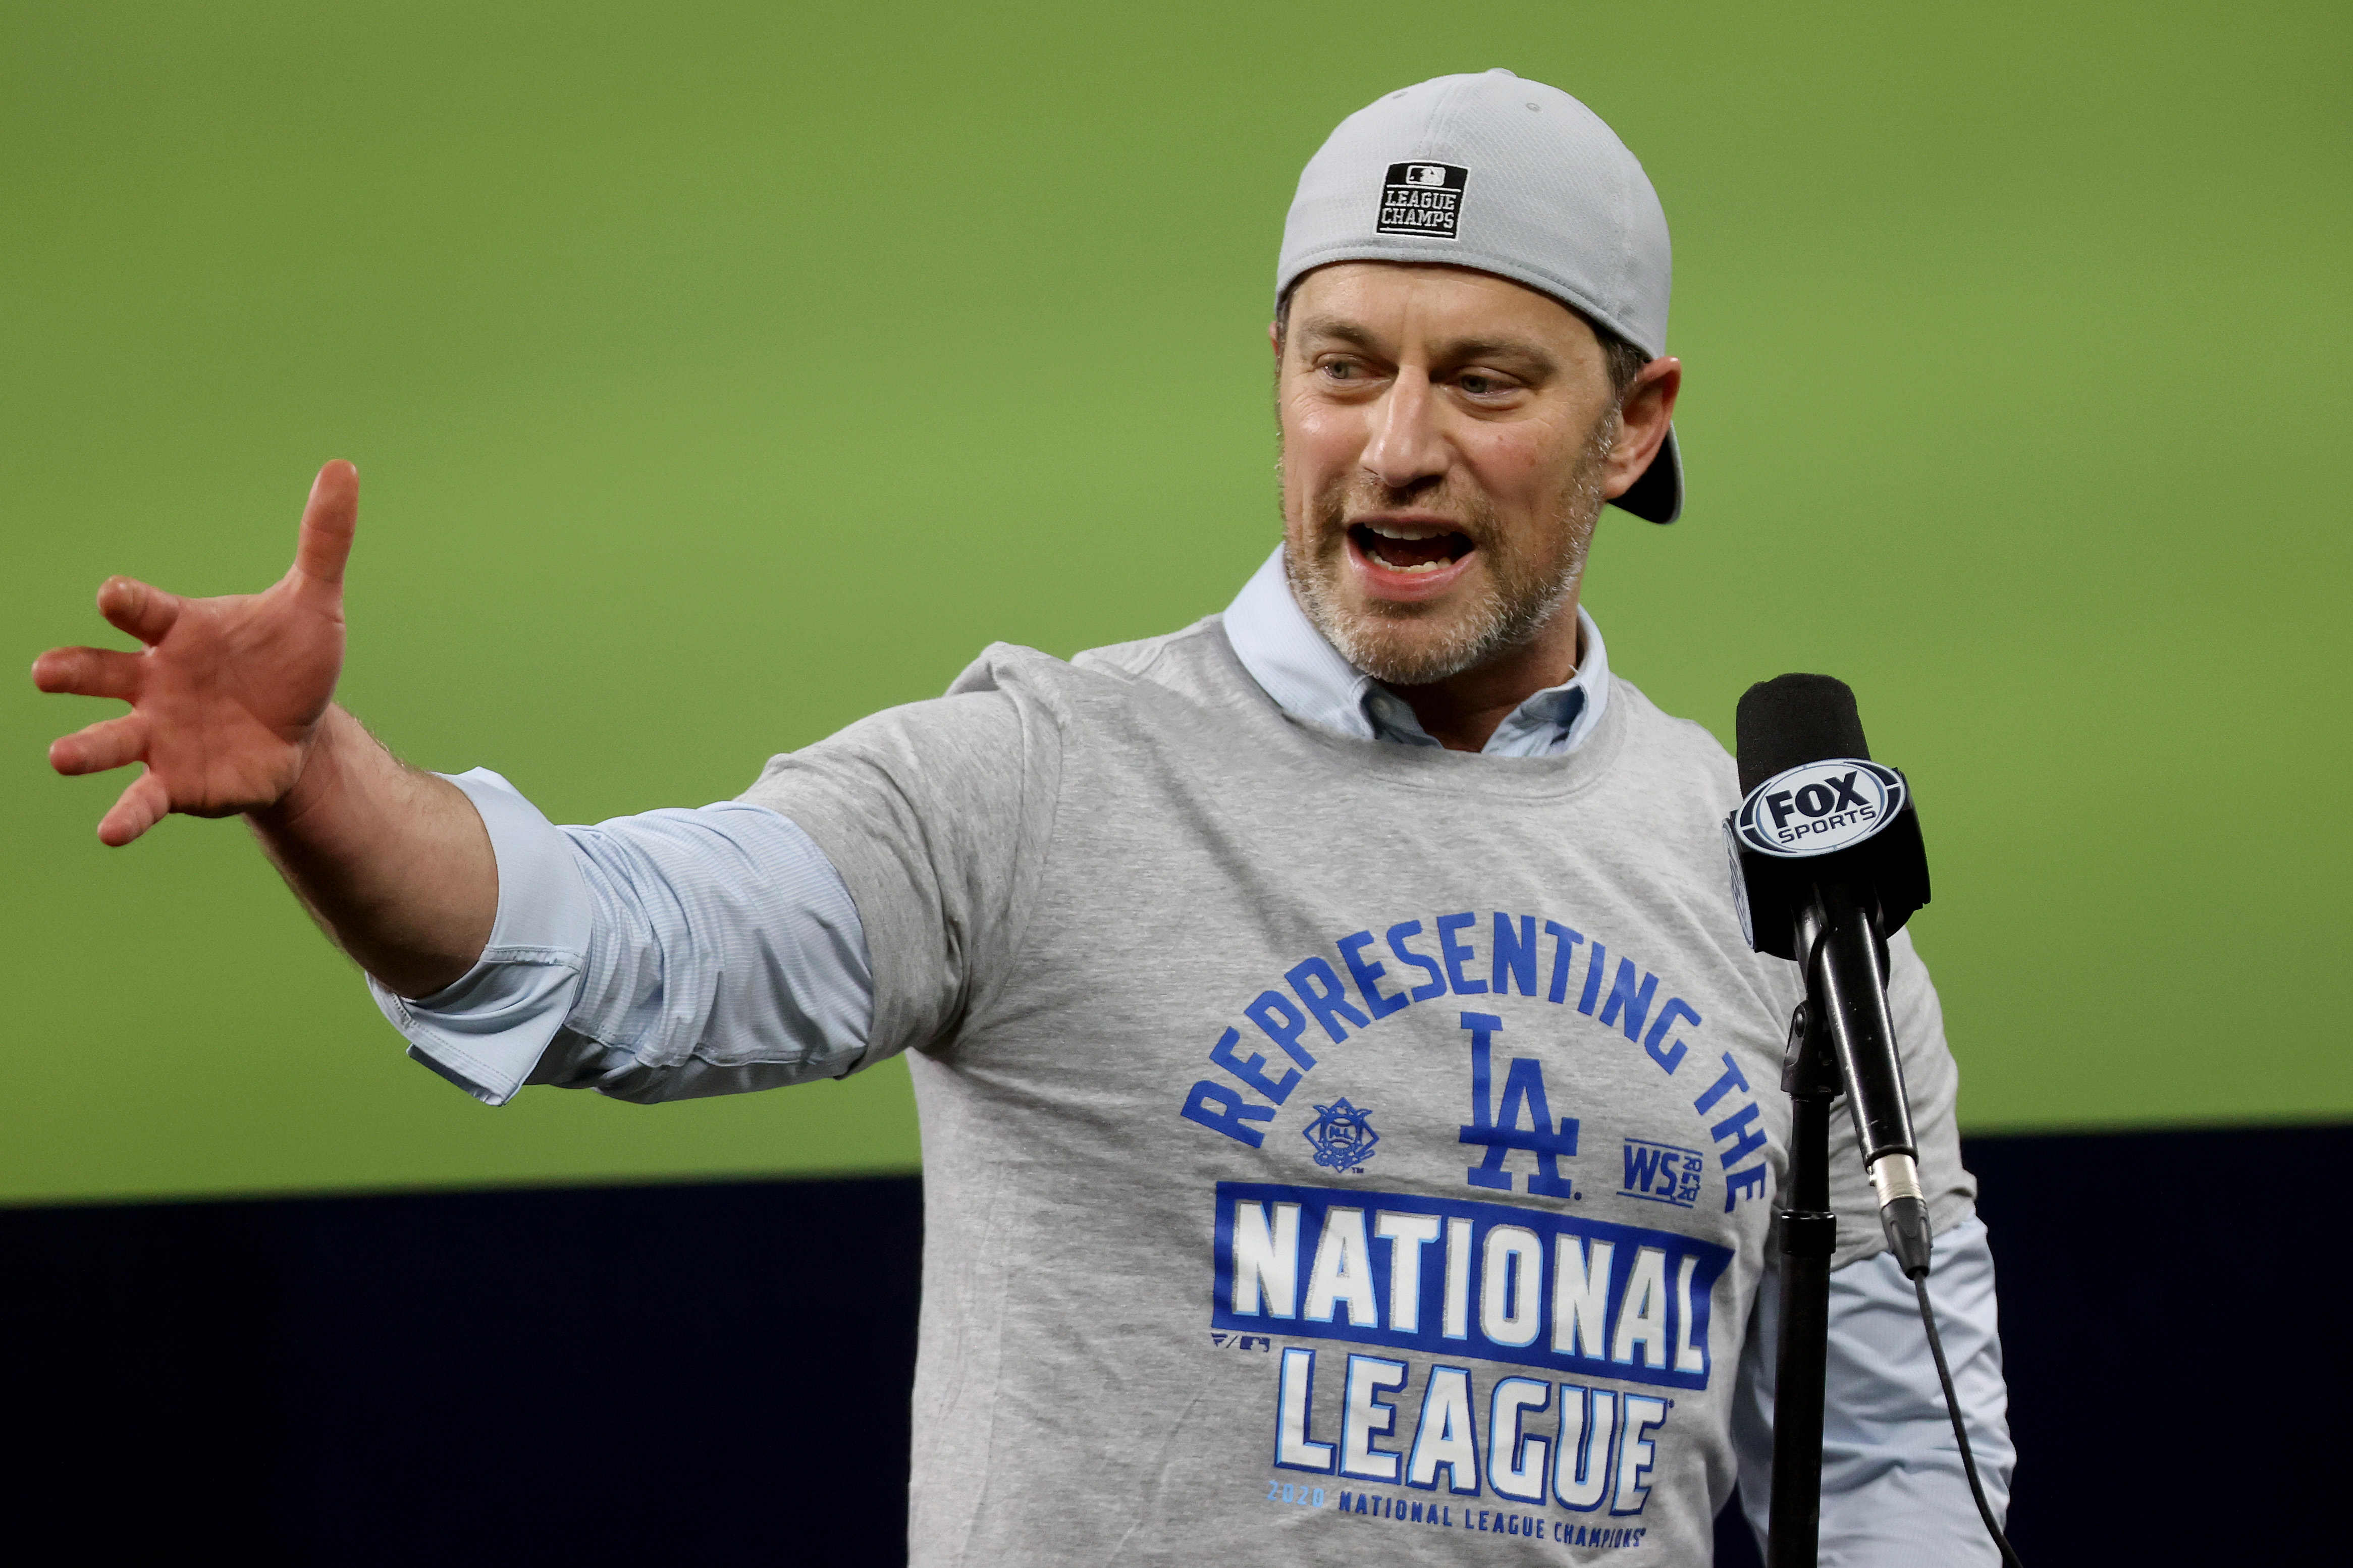 Andrew Friedman bemoans Dodgers' organizational failure - Los